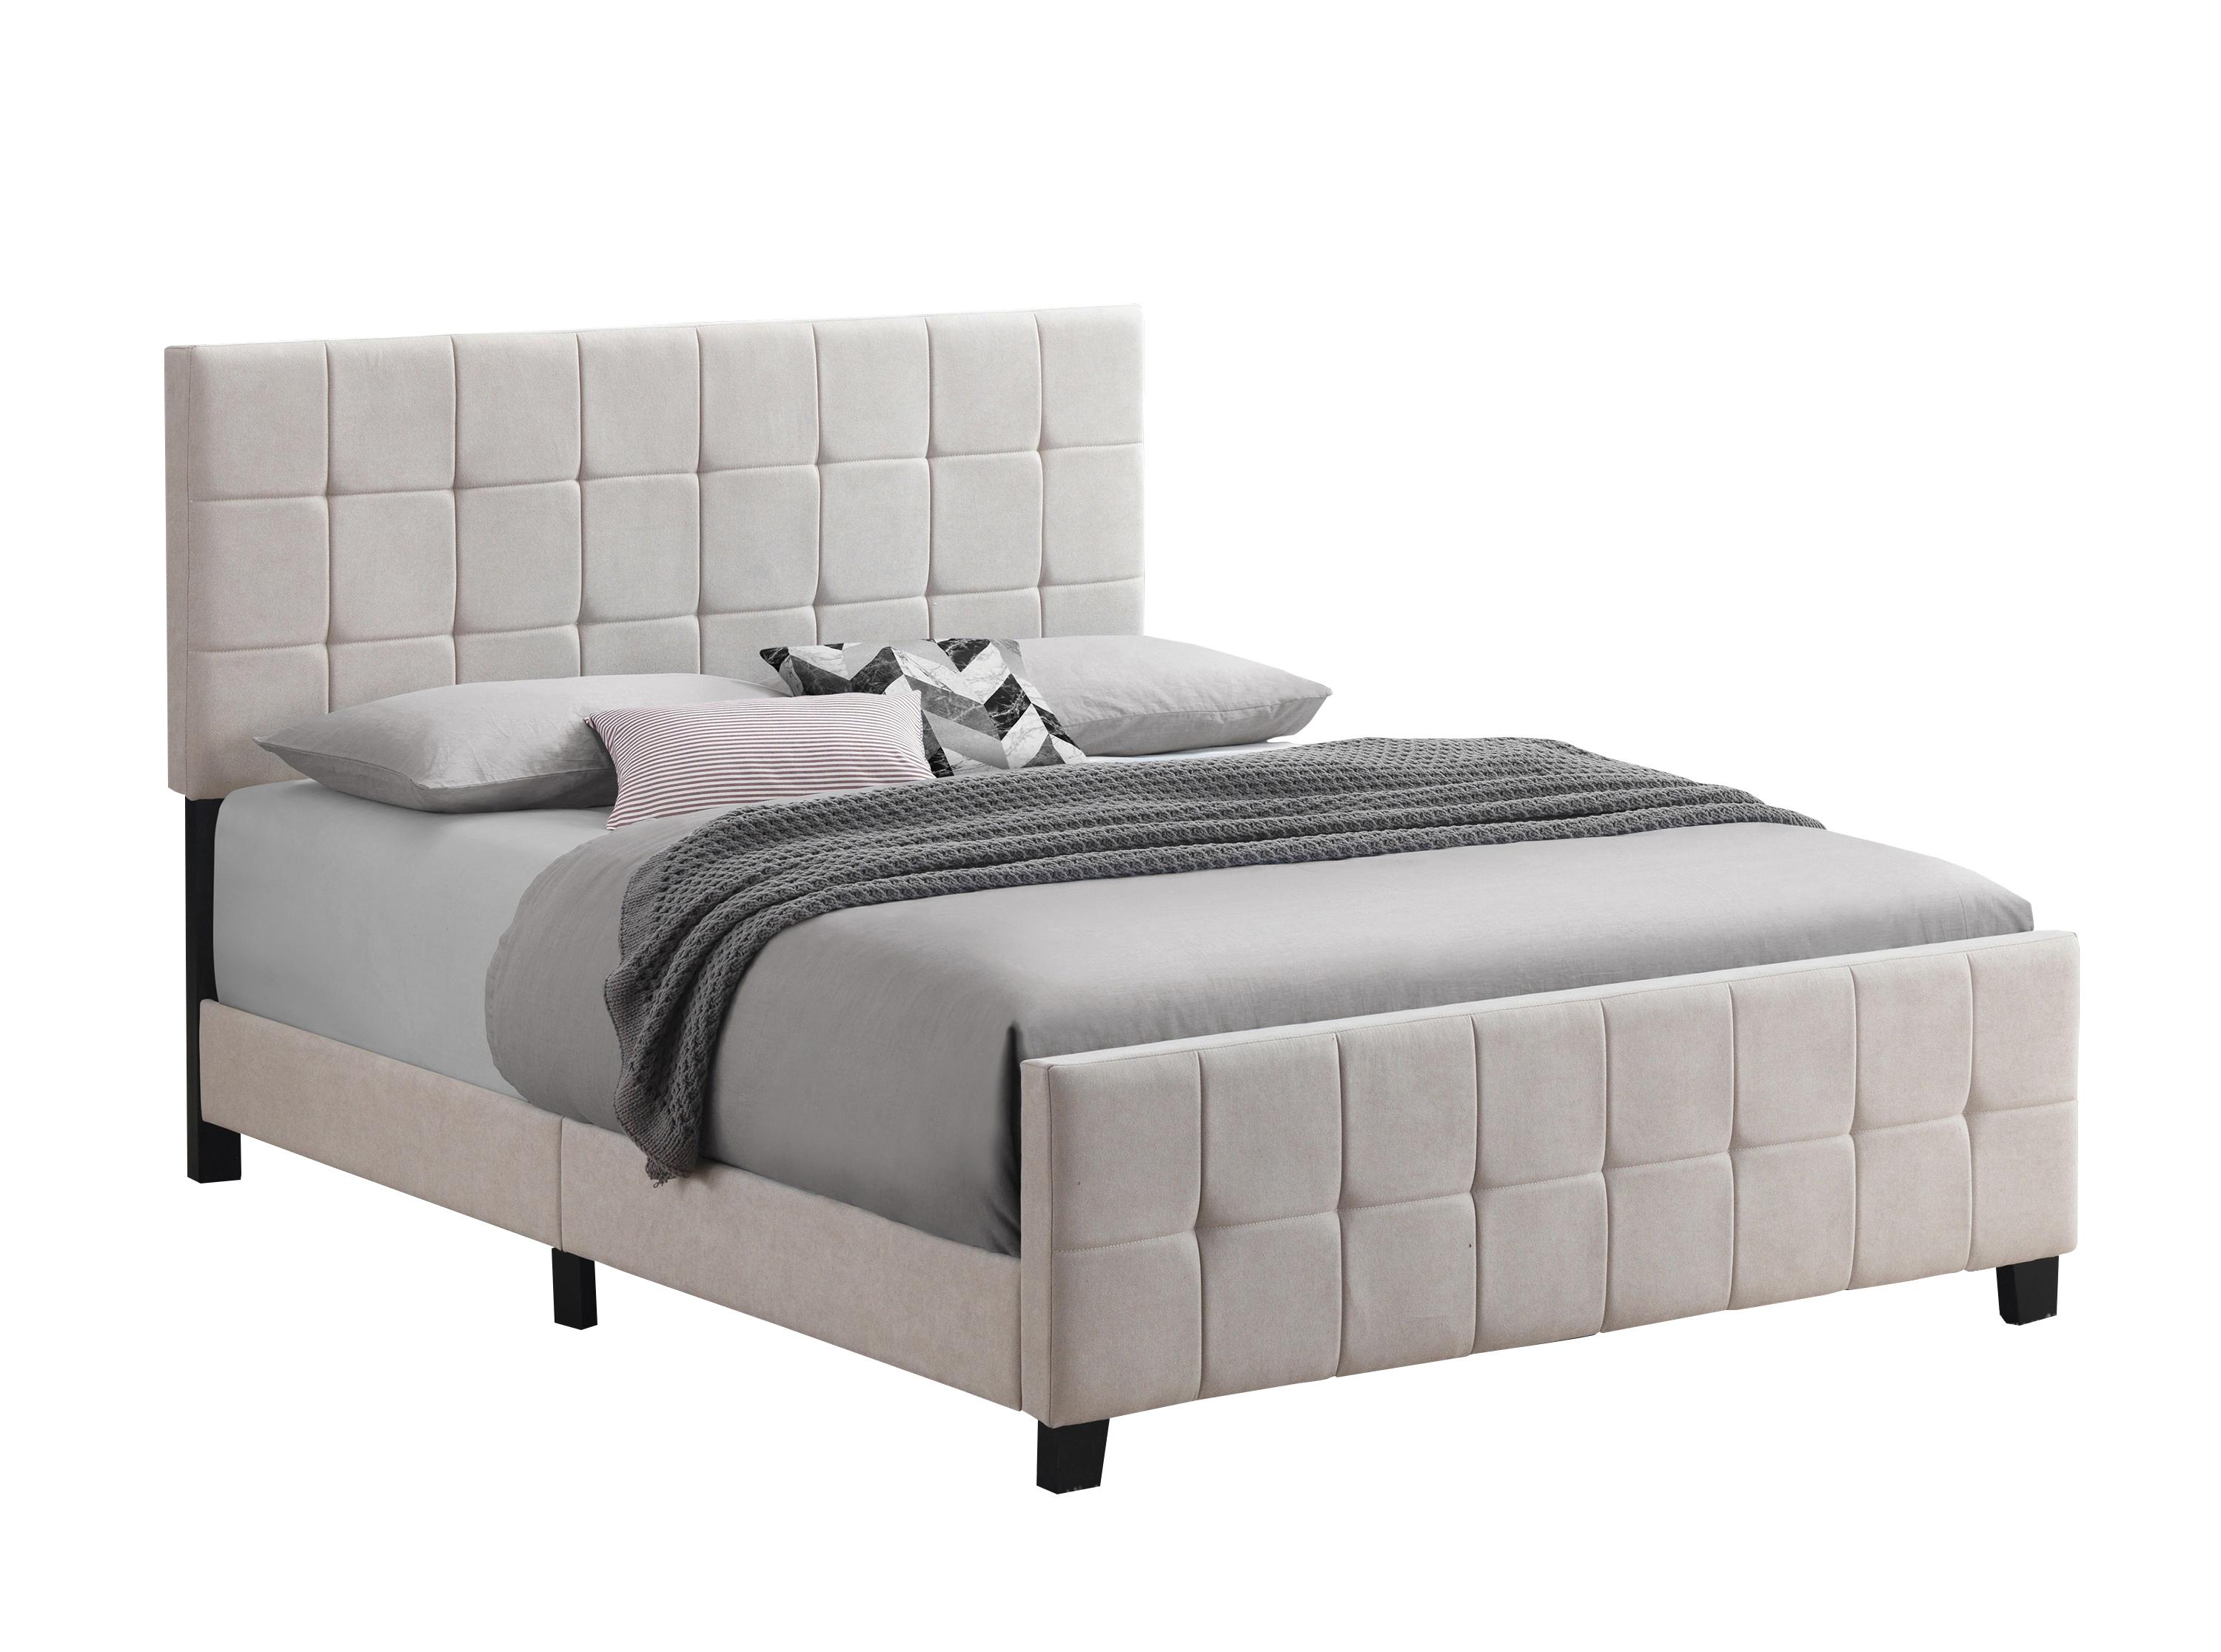 Contemporary Bed 305952Q Fairfield 305952Q in Beige Fabric